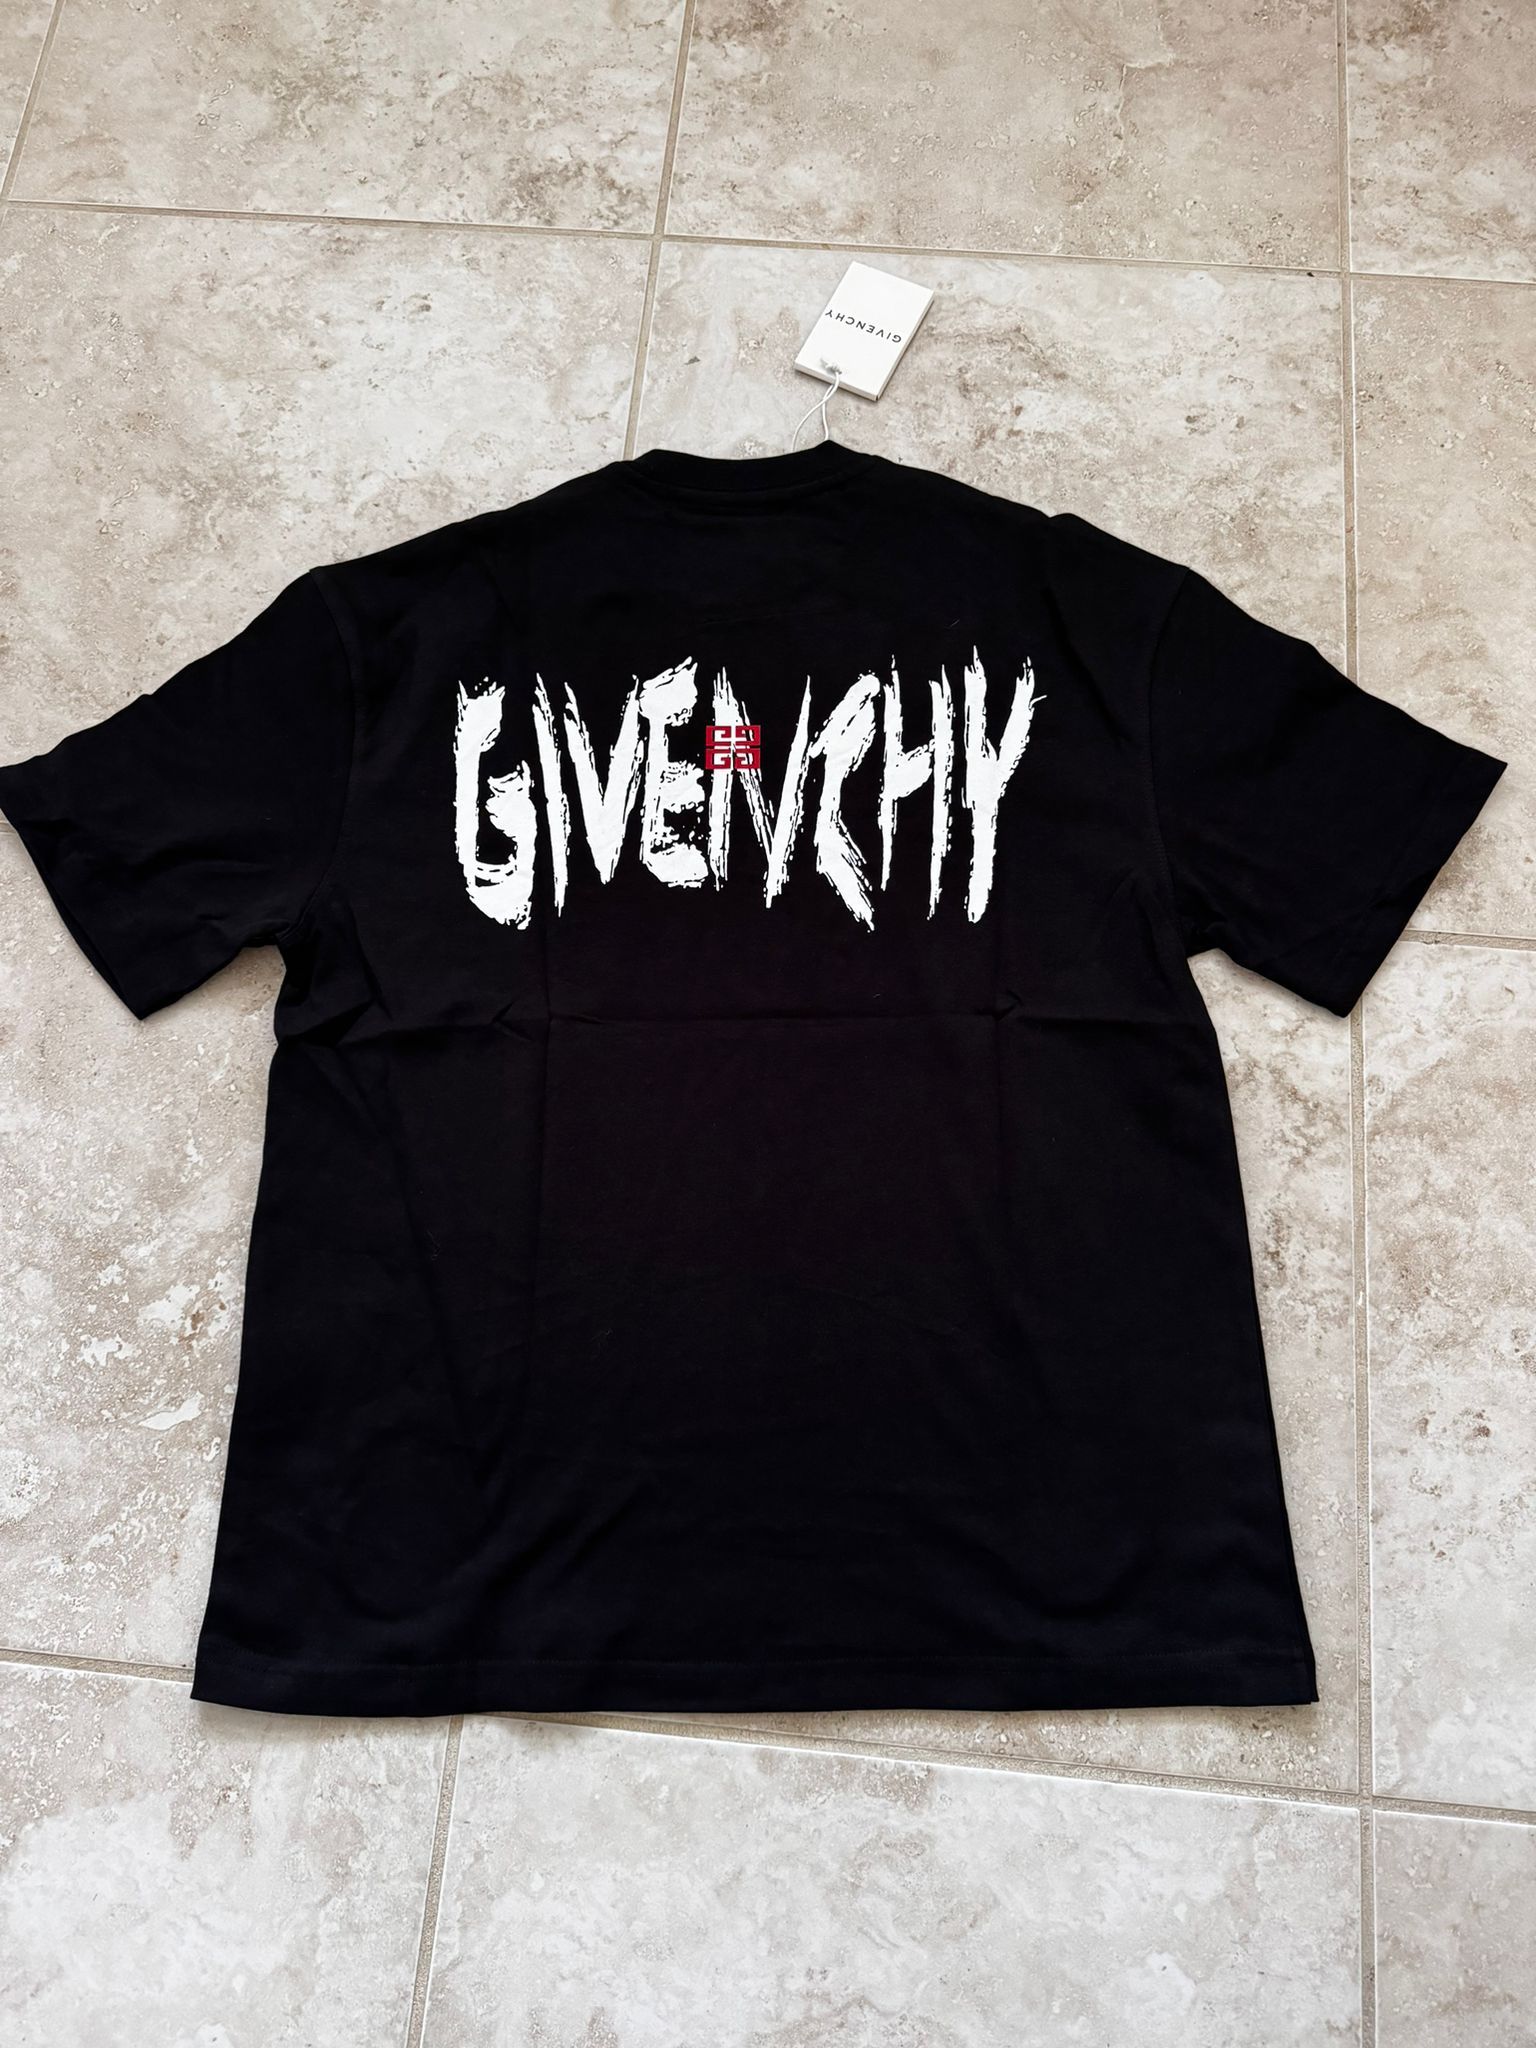 Givenchy T-shirt New Season Any Colors 